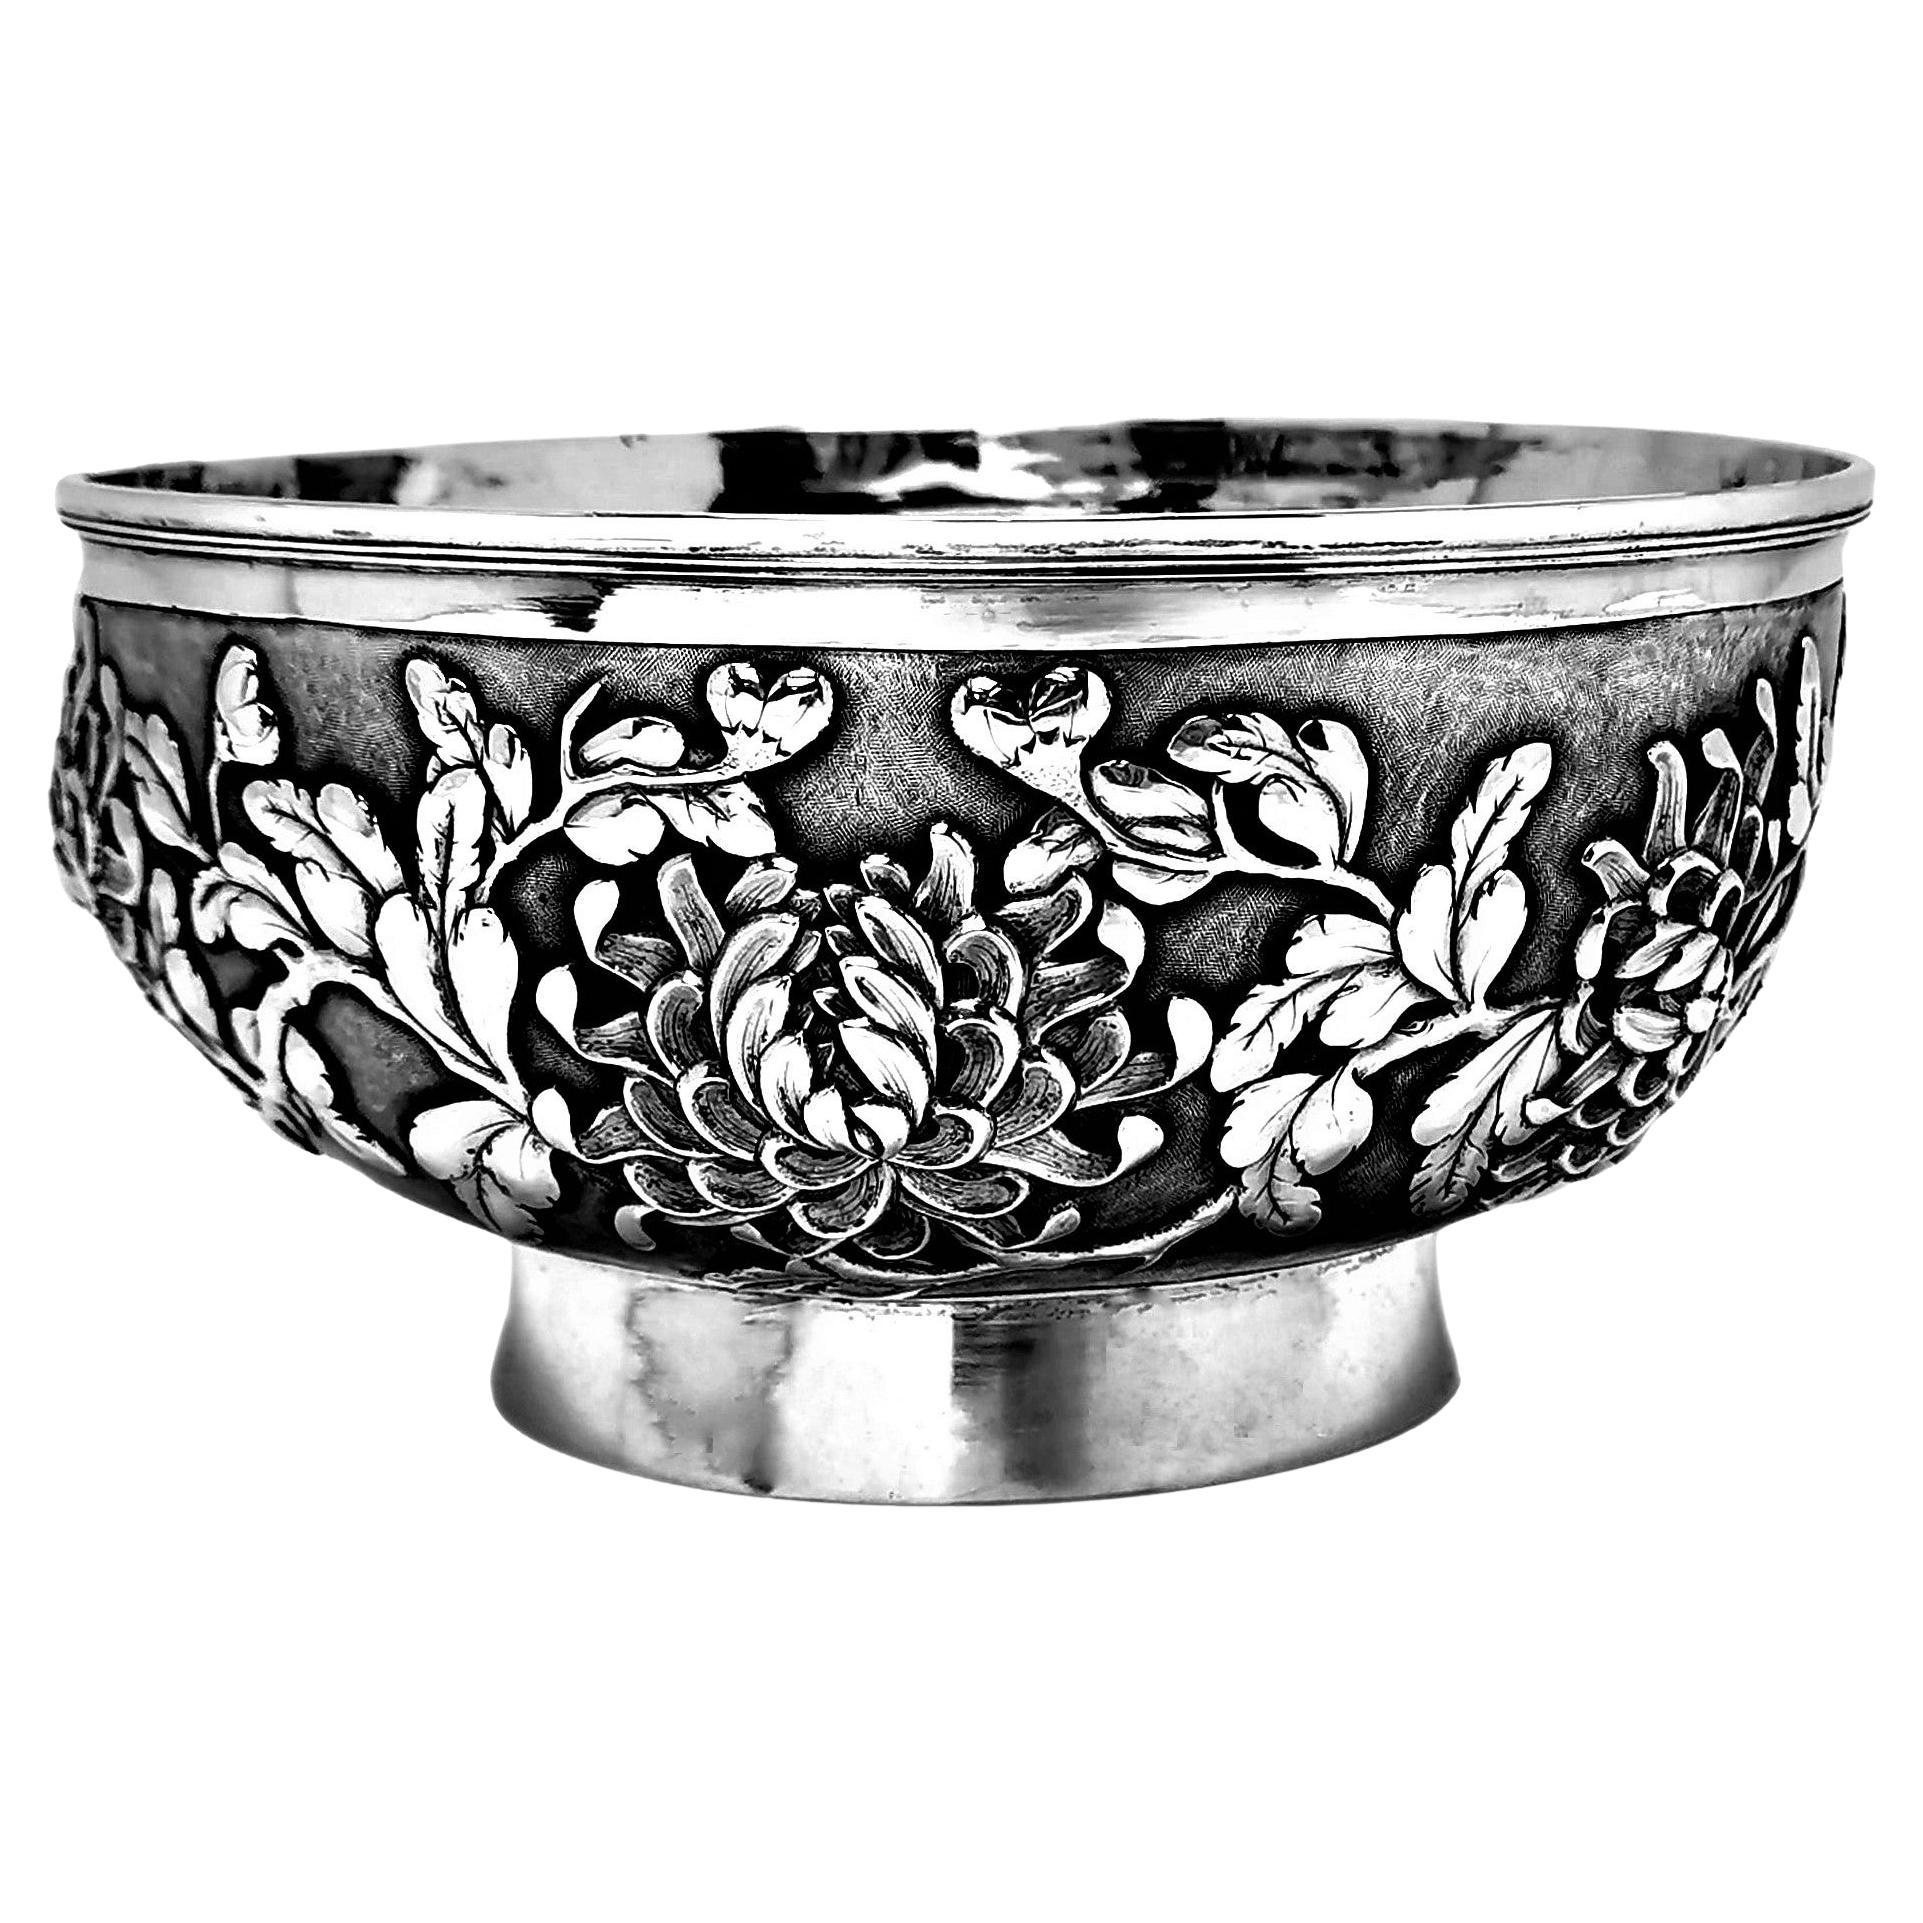 Antique Chinese Solid Silver Bowl / Dish c. 1890 Luen Wo, Shanghai